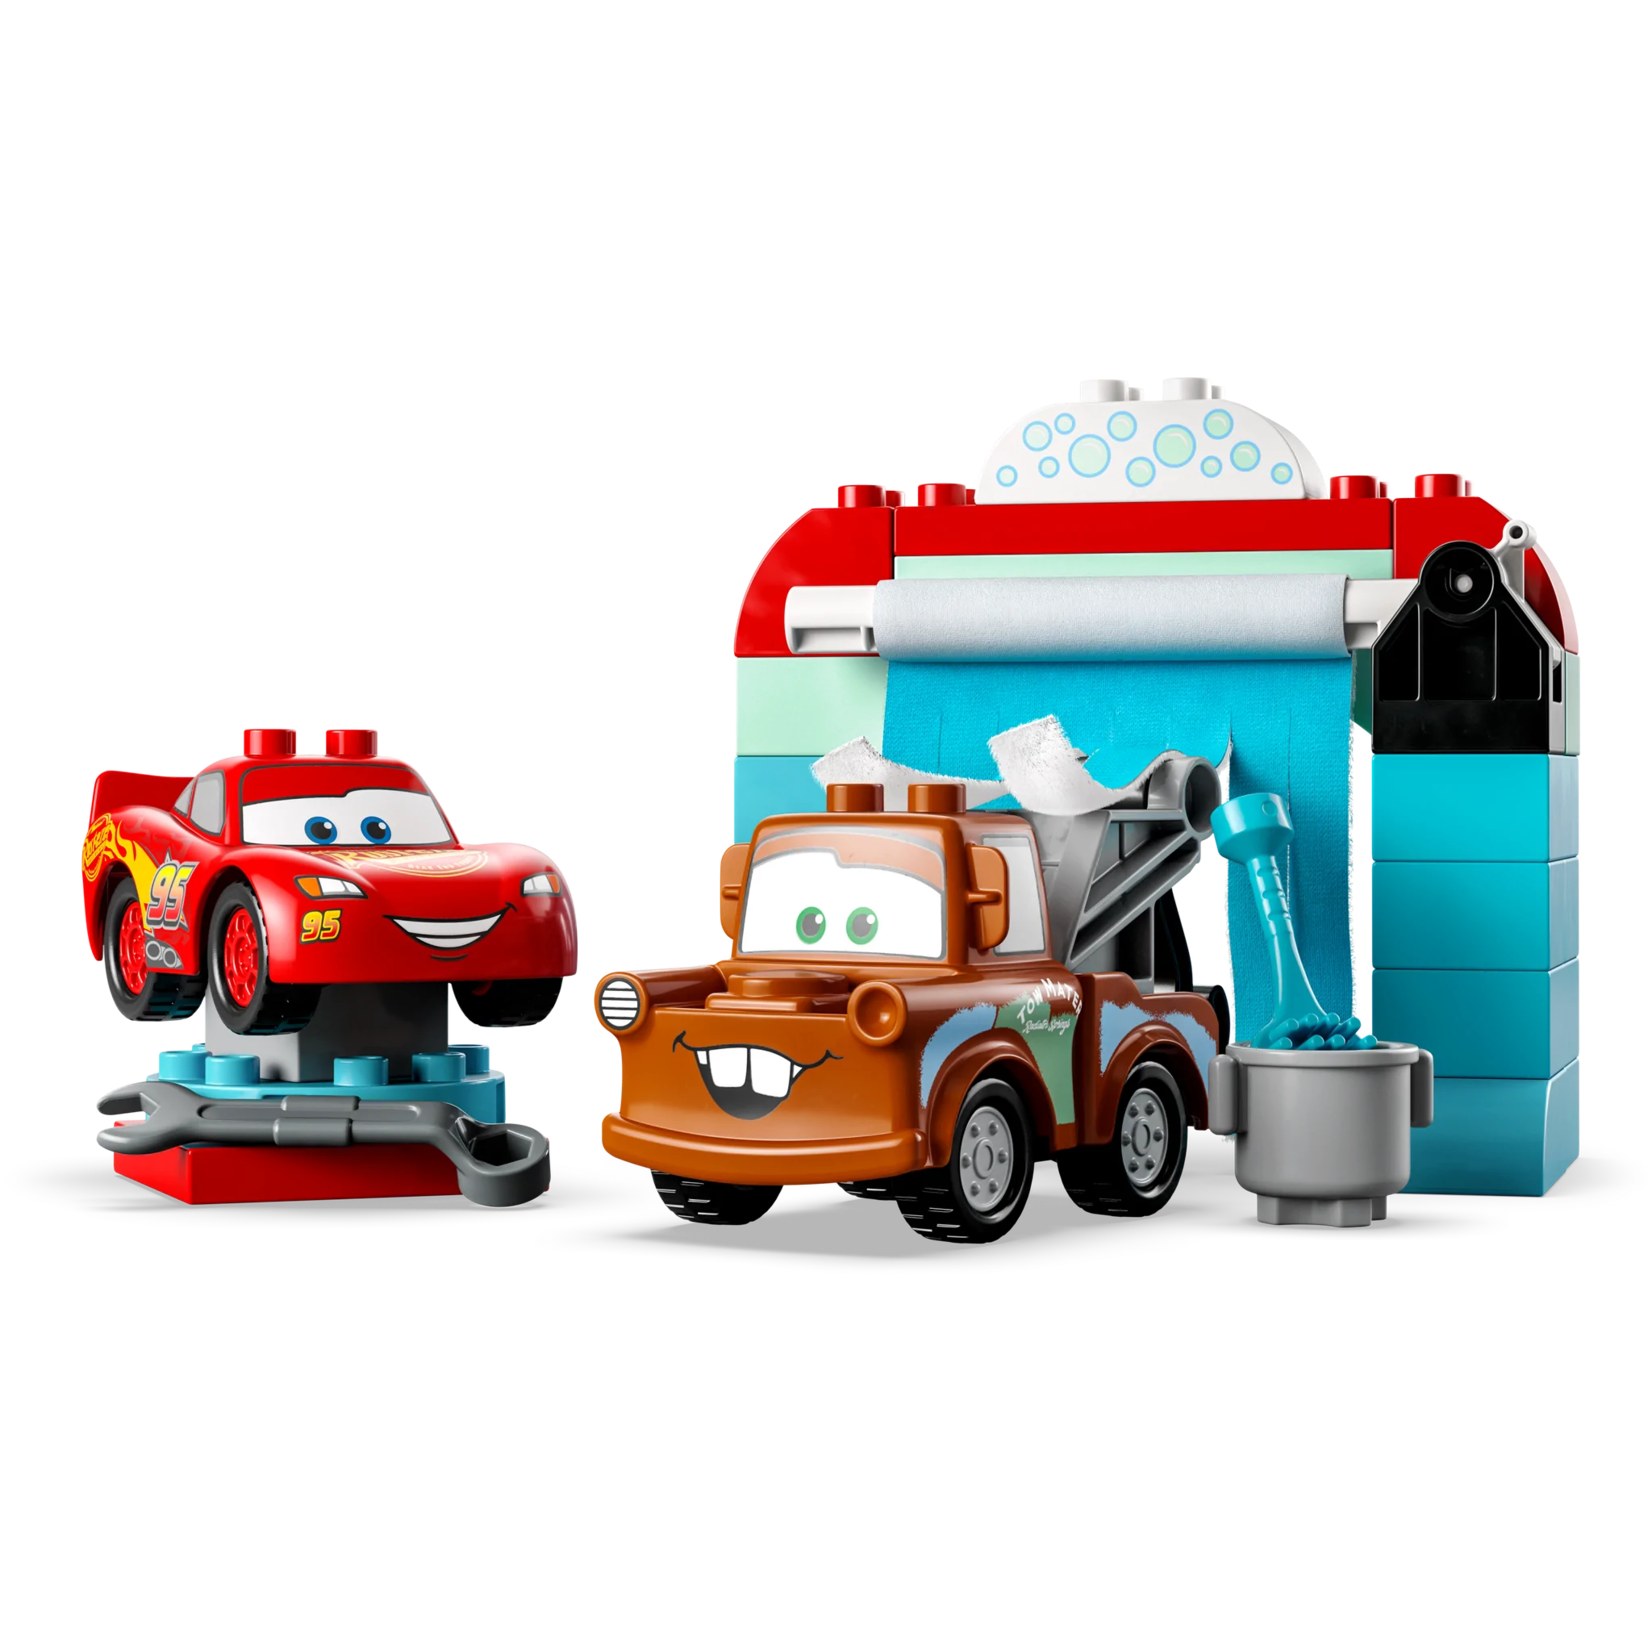 LEGO LEGO Disney Lightning McQueen & Mater's Car Wash Fun 10996